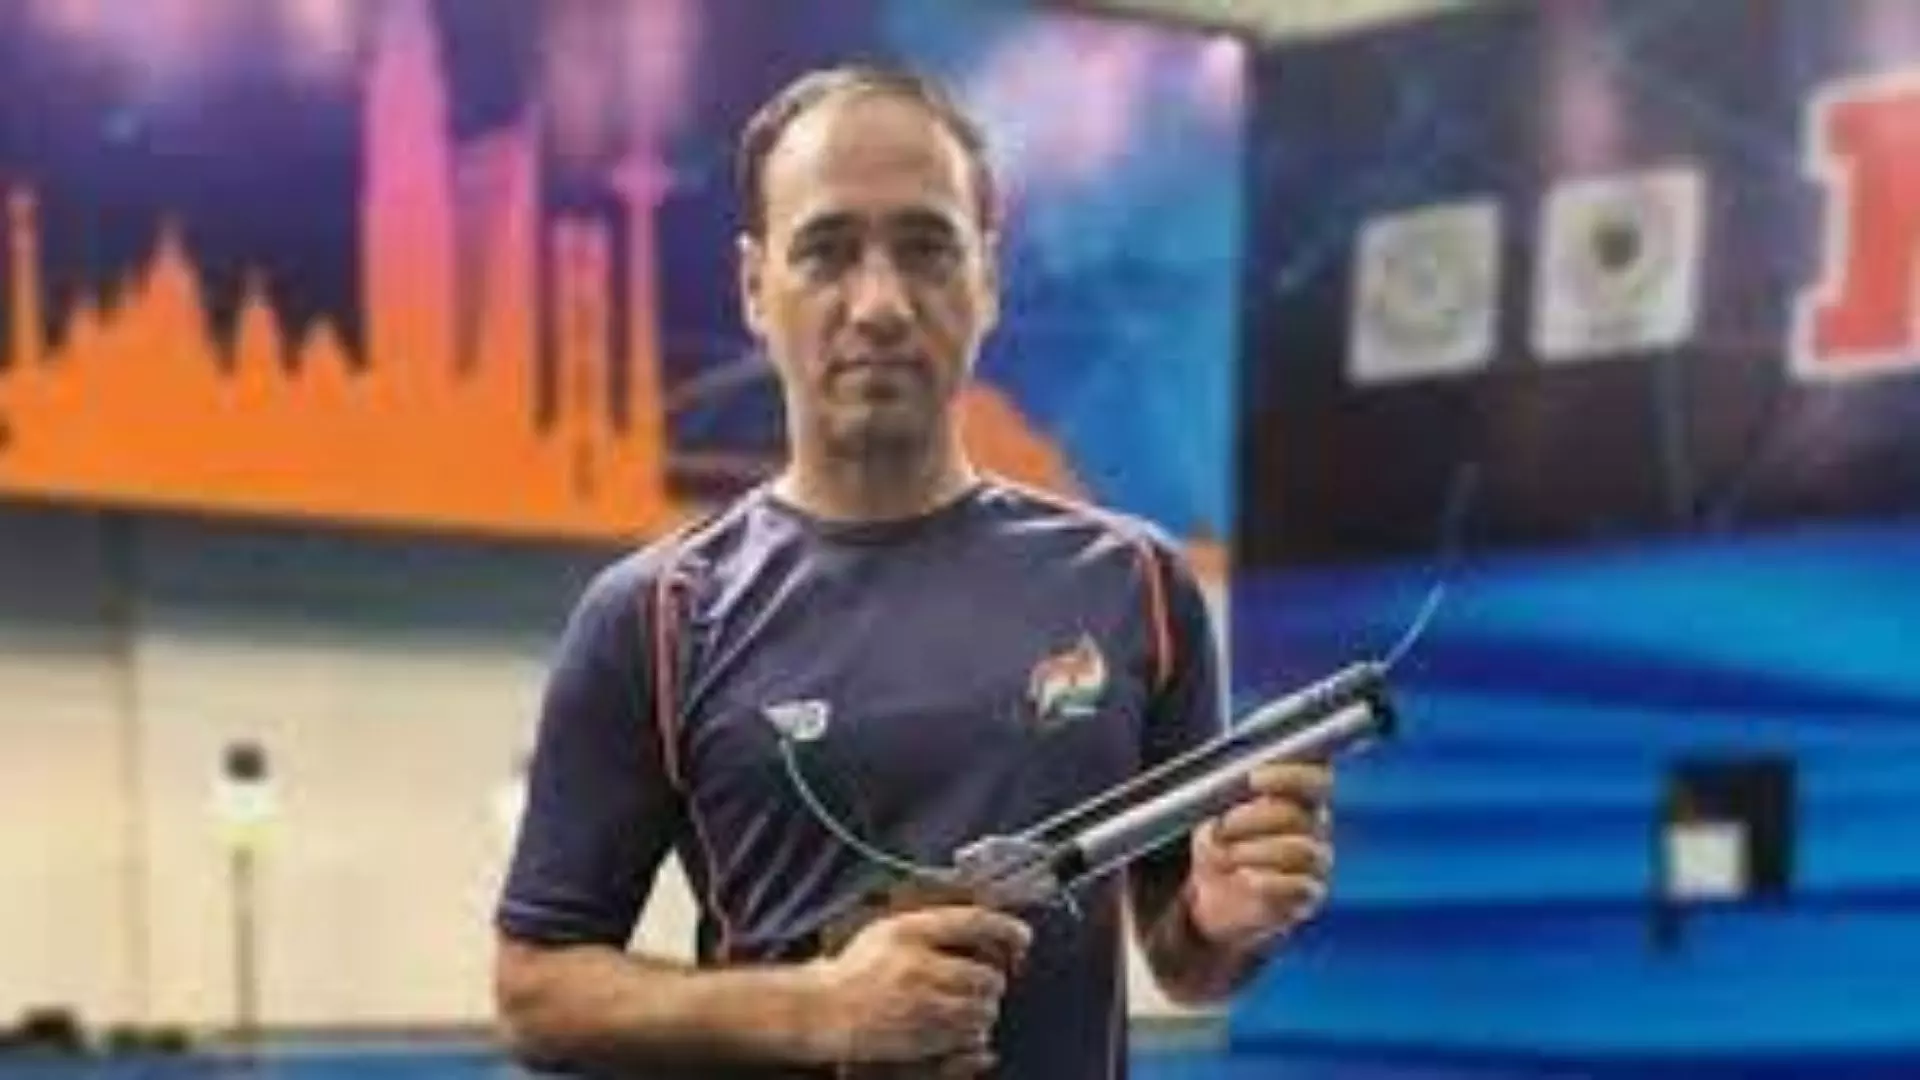 Singaraj Won Bronze Medal in the Tokyo Paralympics Mens 10m Air Pistol